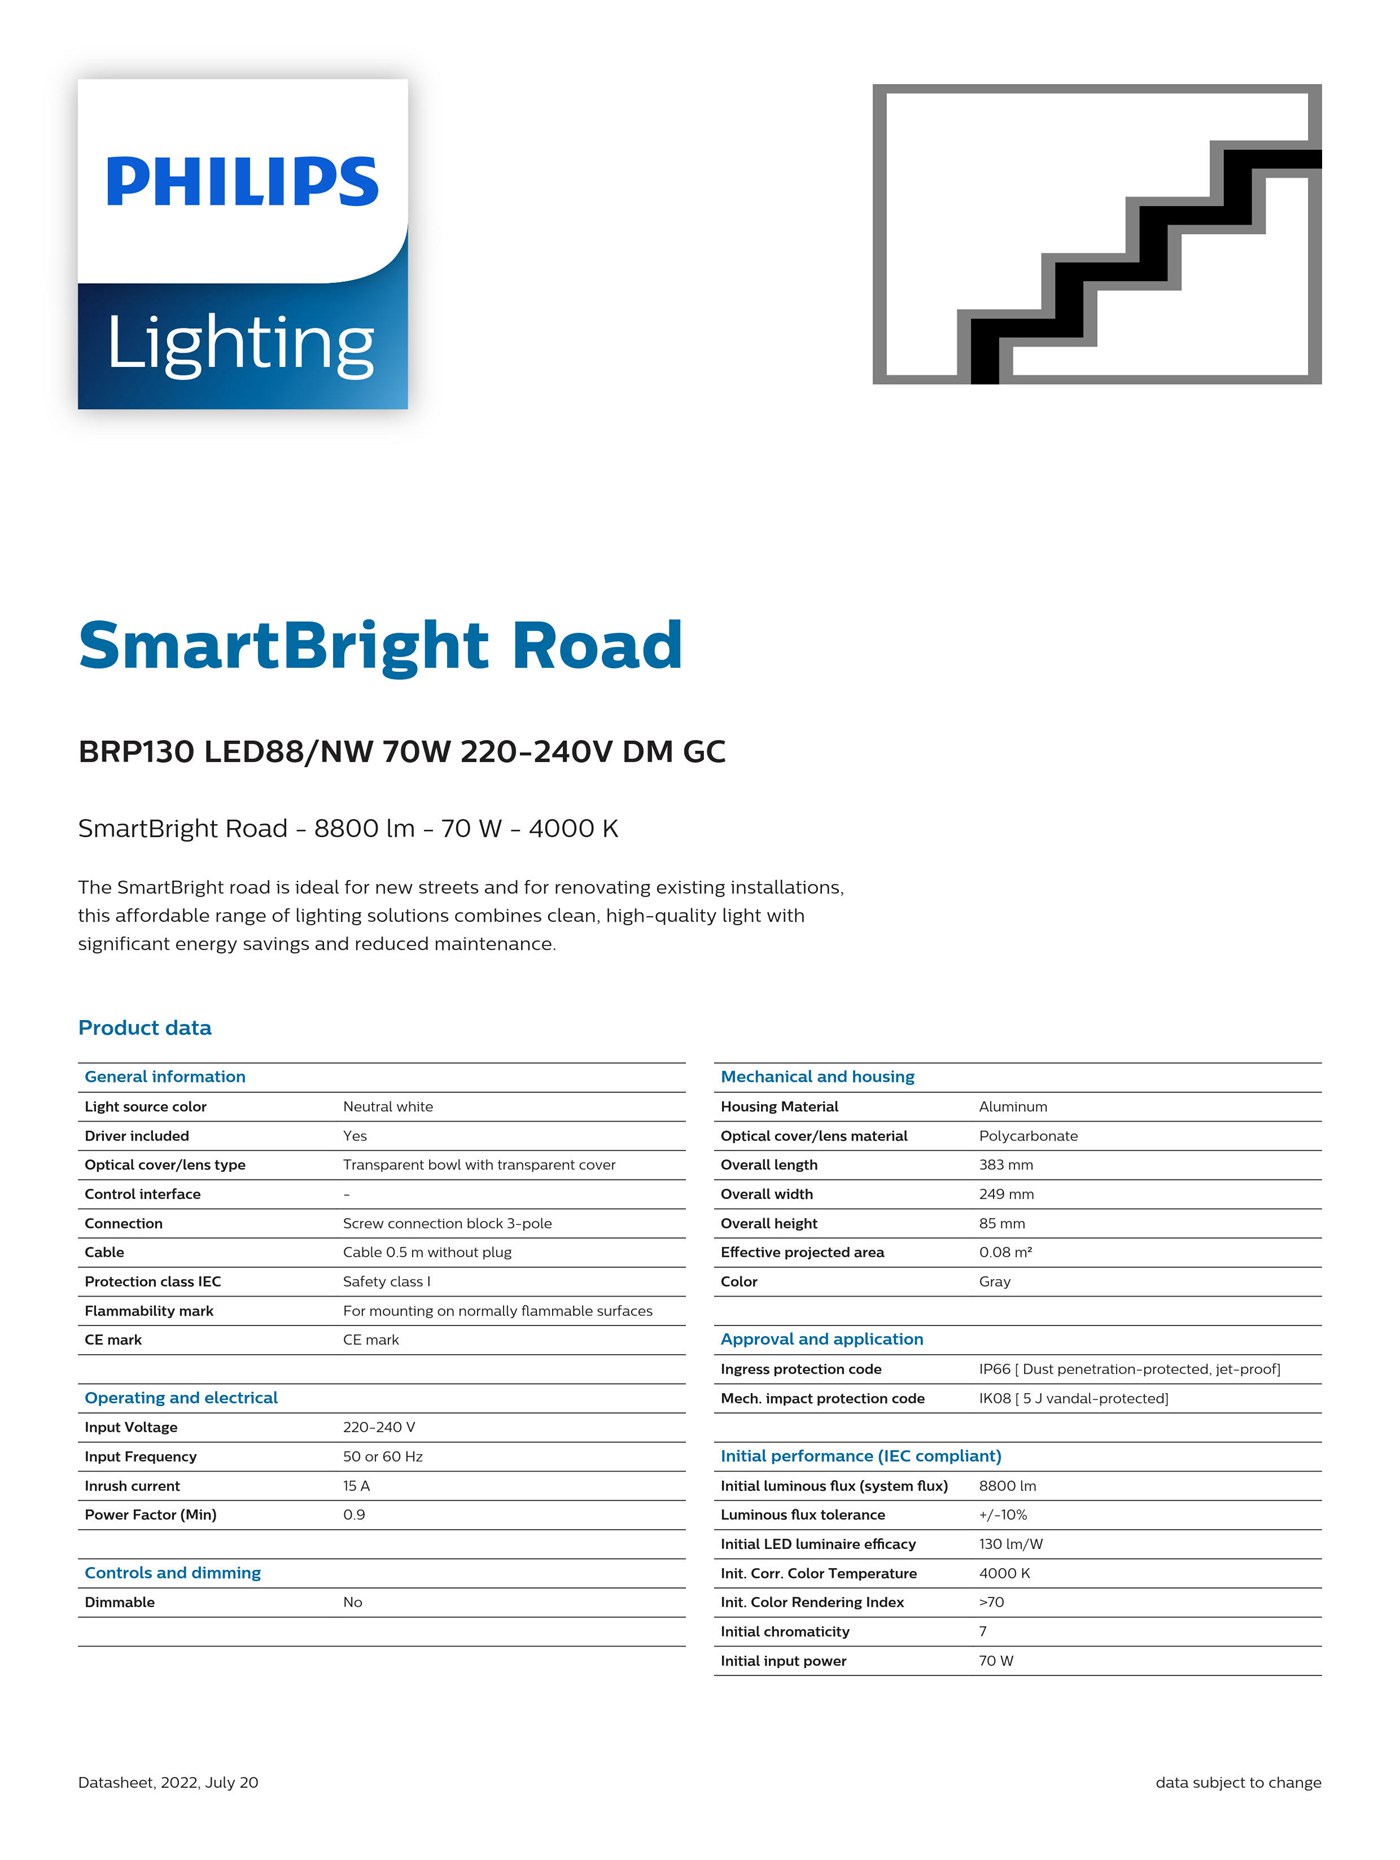 PHILIPS SmartBright Road BRP130 LED88/NW 70W 220-240V DM GC 911401675107